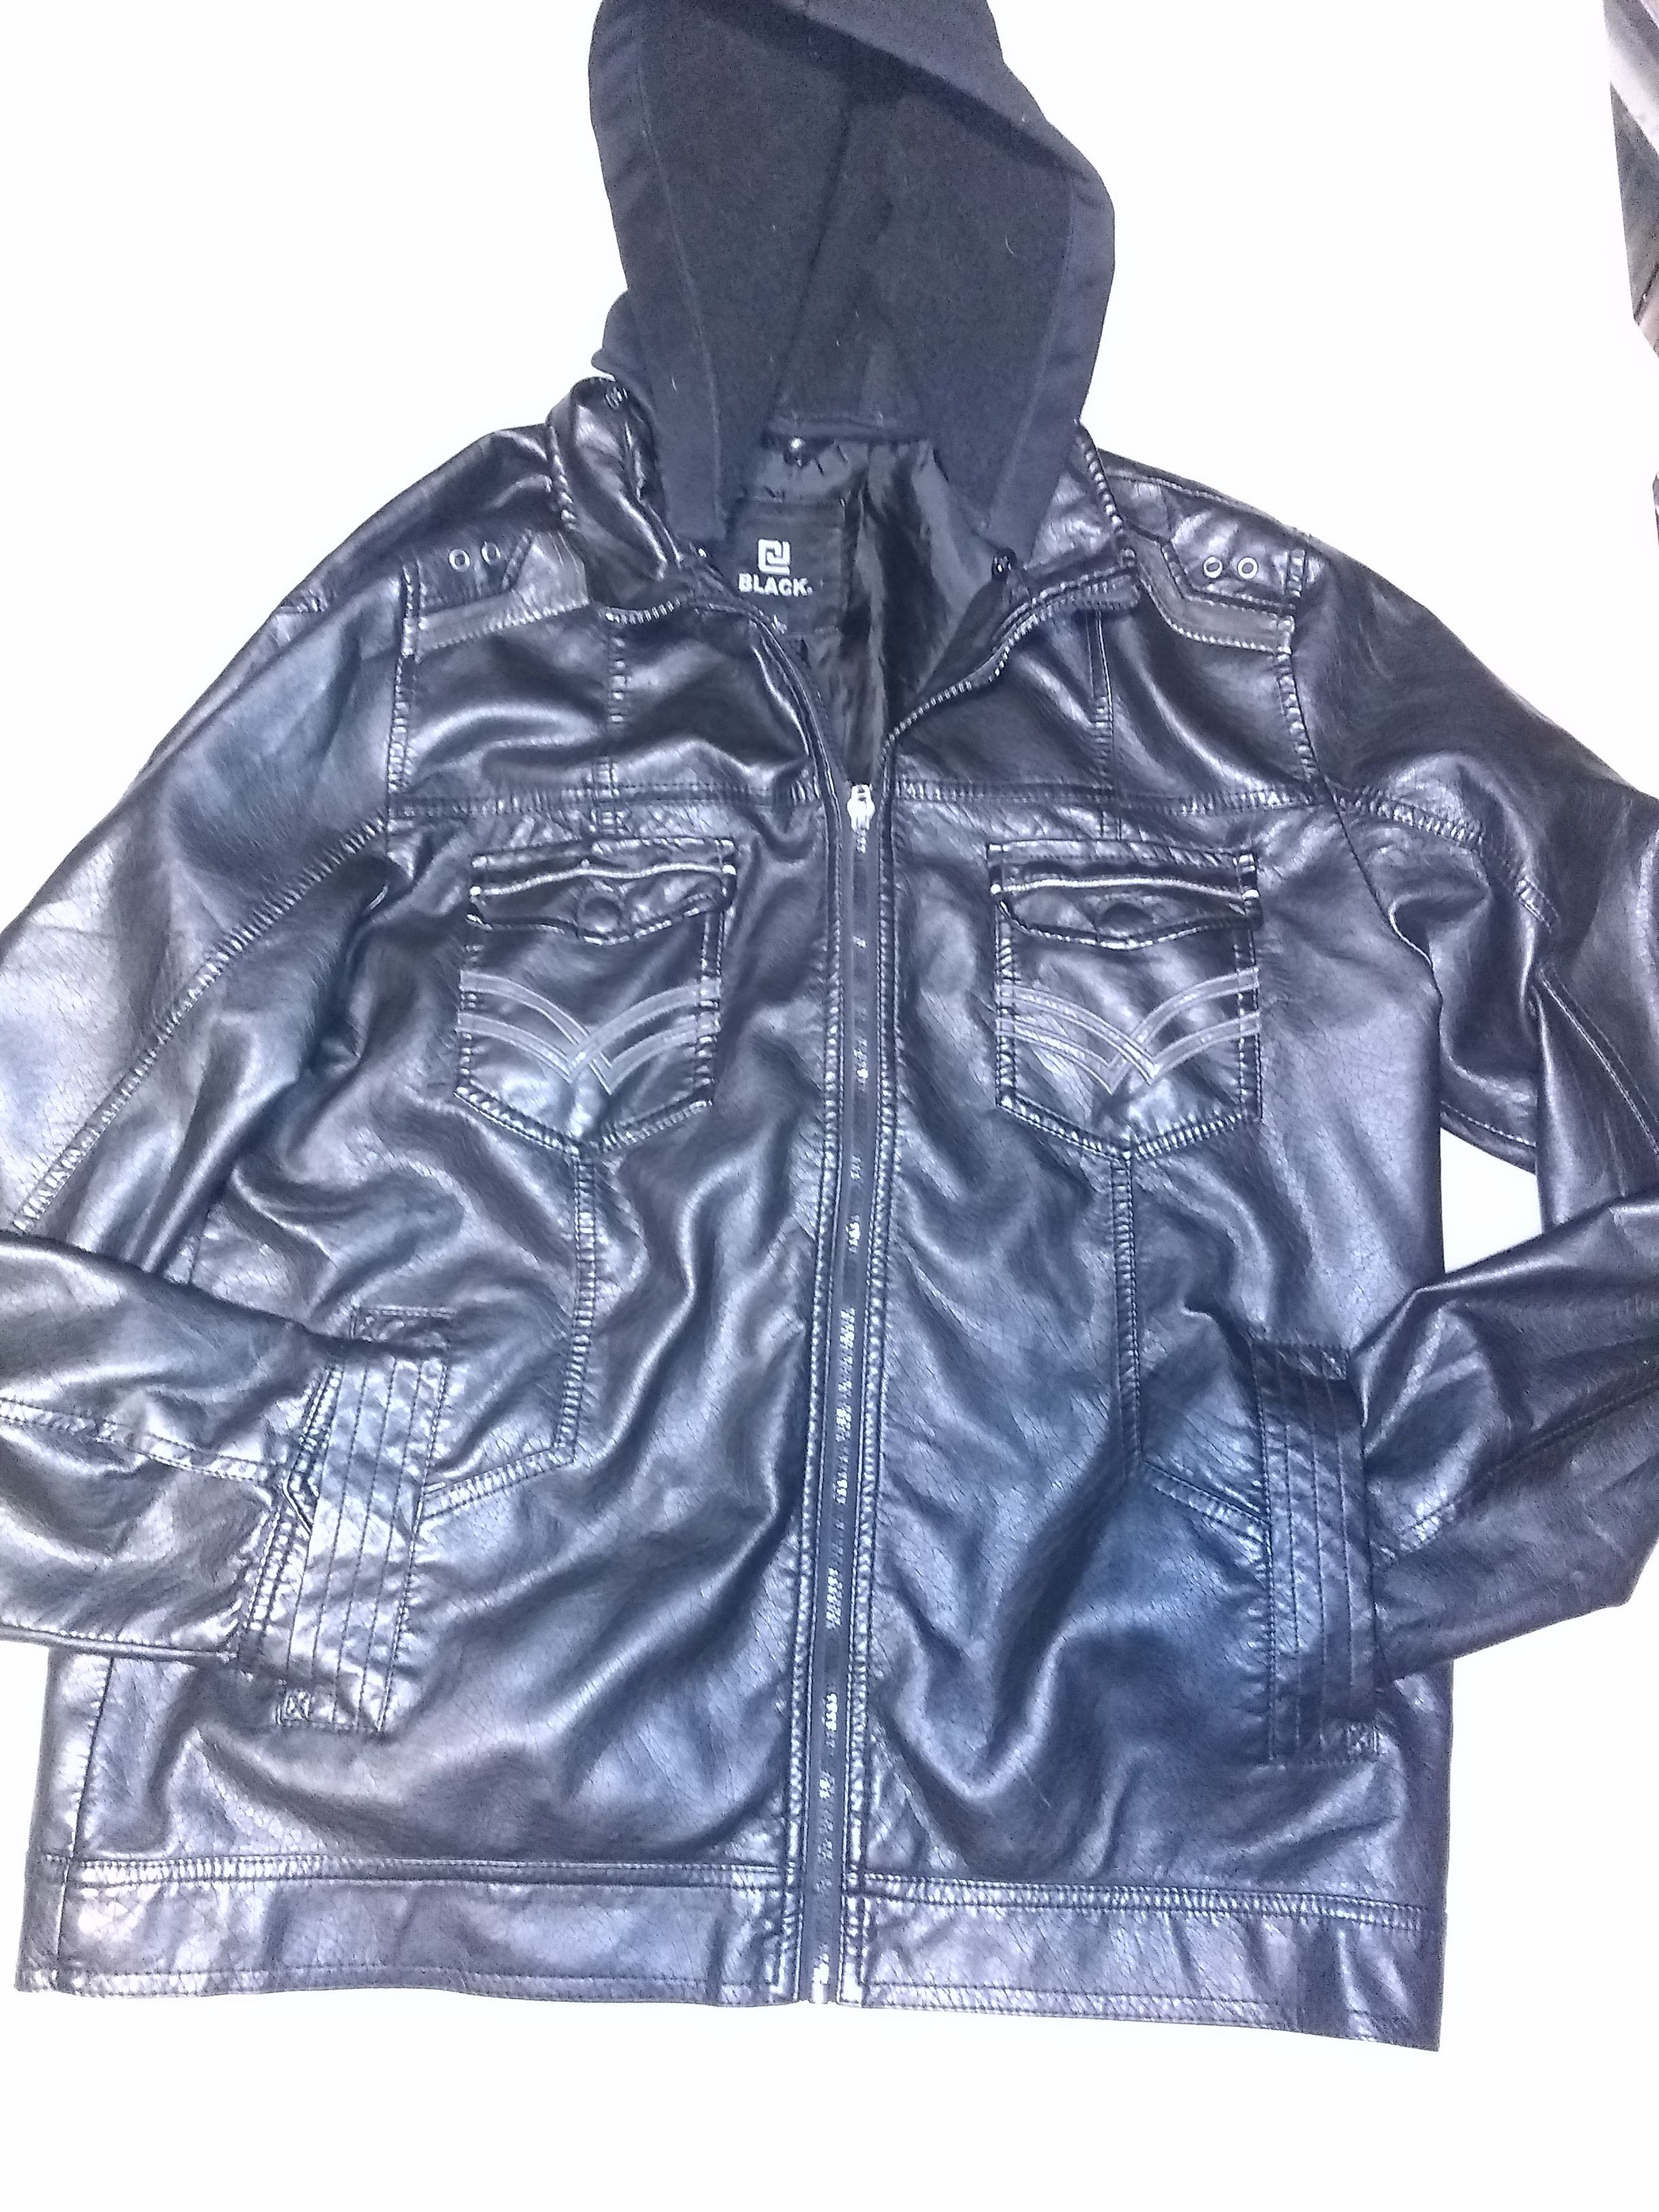 Black Black Men's Leather Motorcycle jacket L Size US L / EU 52-54 / 3 - 1 Preview